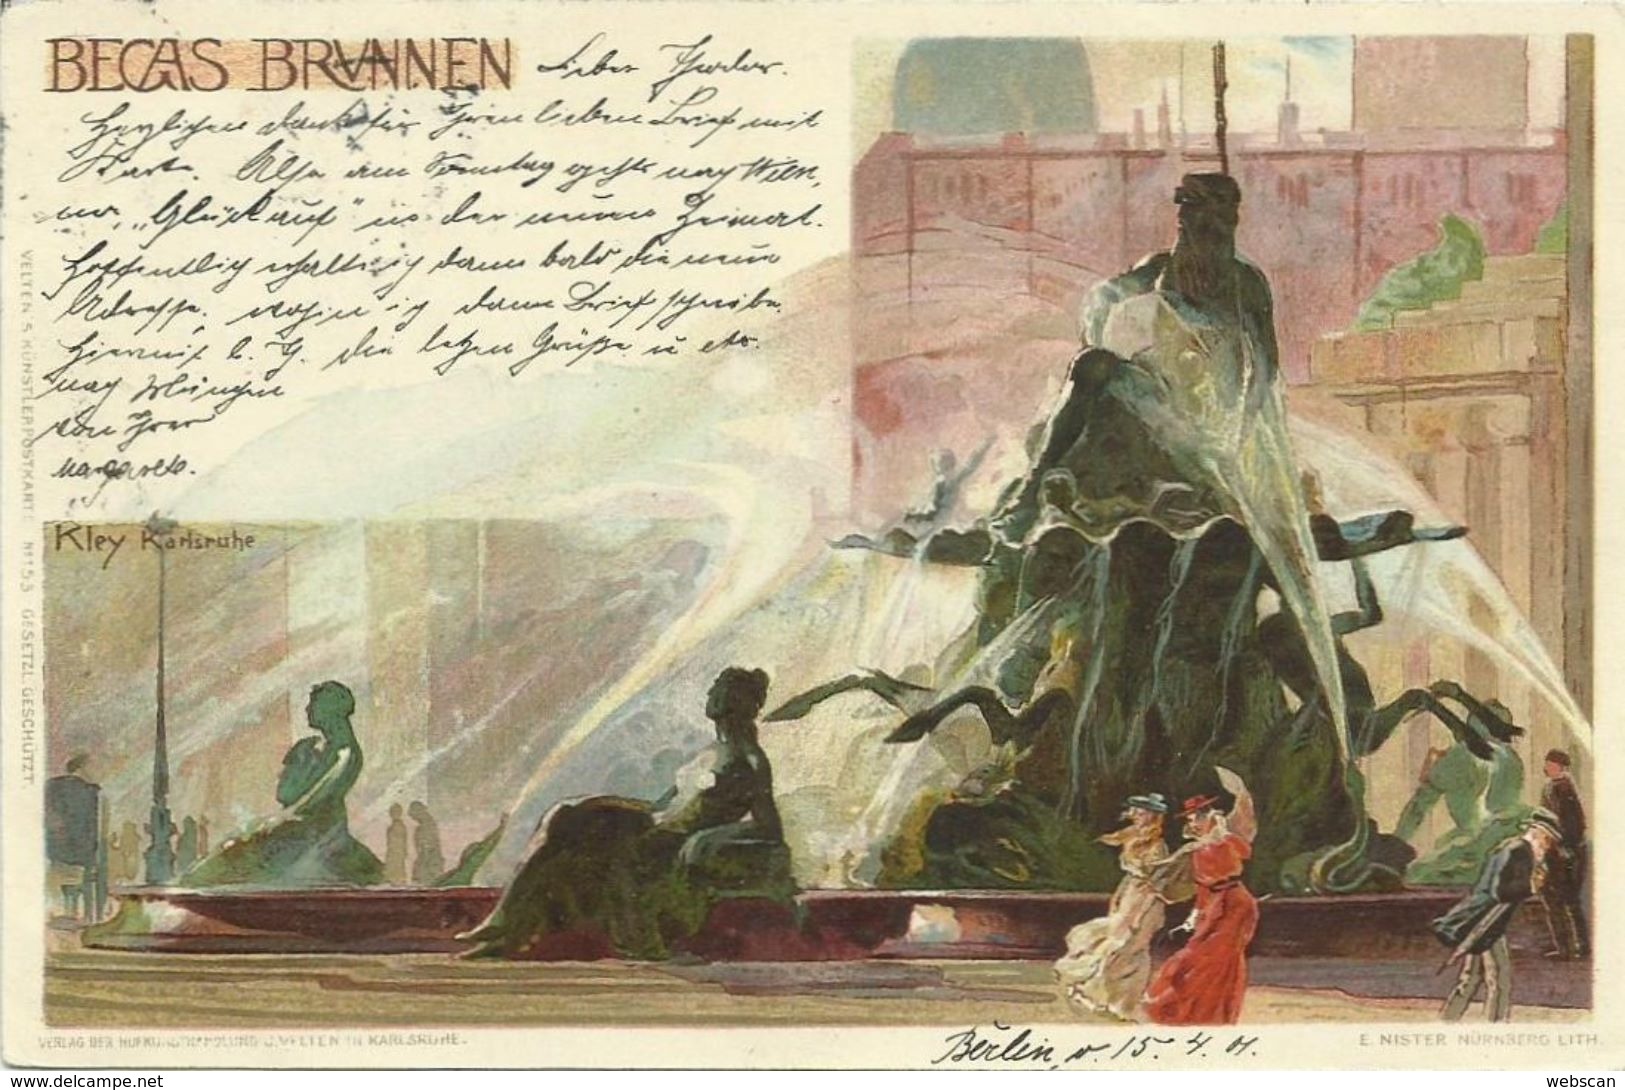 AK Berlin Begas-Brunnen Sign. Kley Farblitho 1901 #26 - Kley